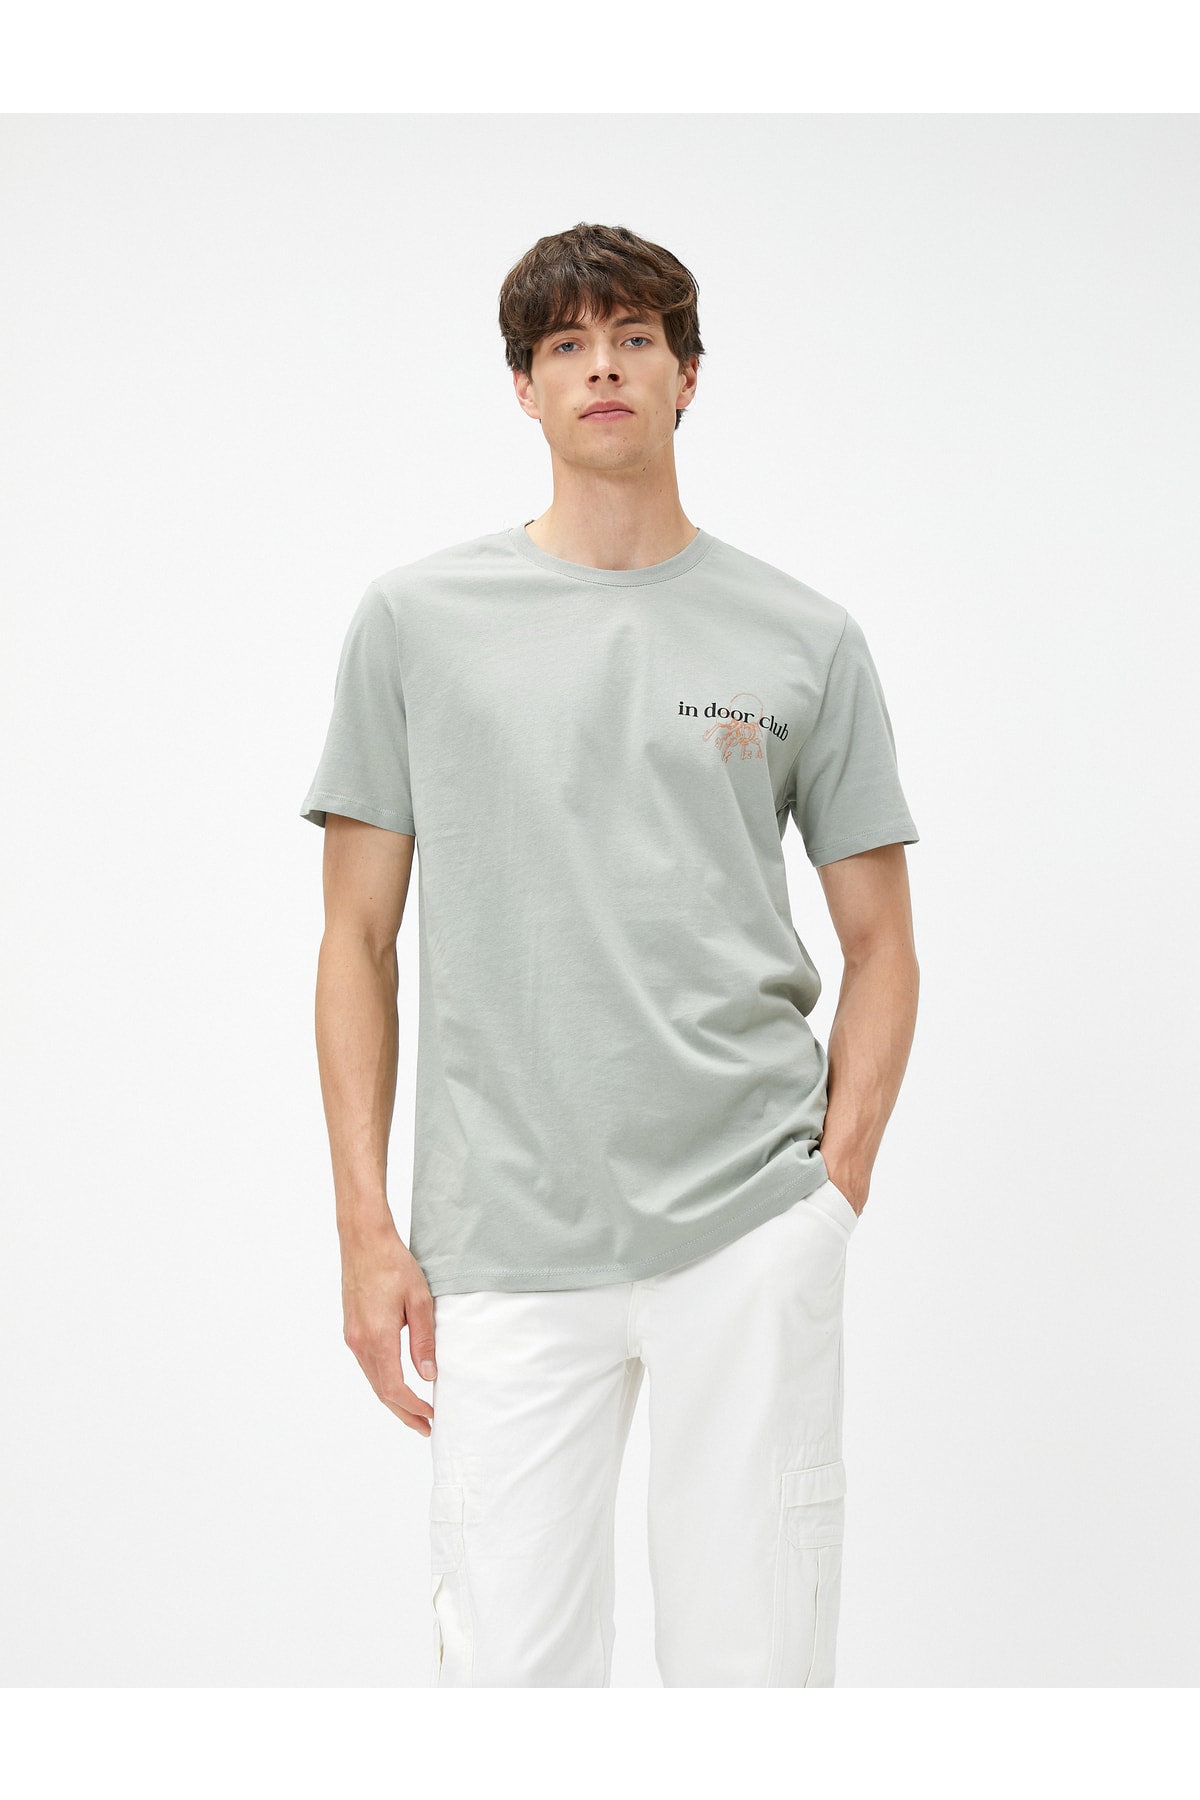 Koton Motto Printed T-Shirt Crew Neck Short Sleeved